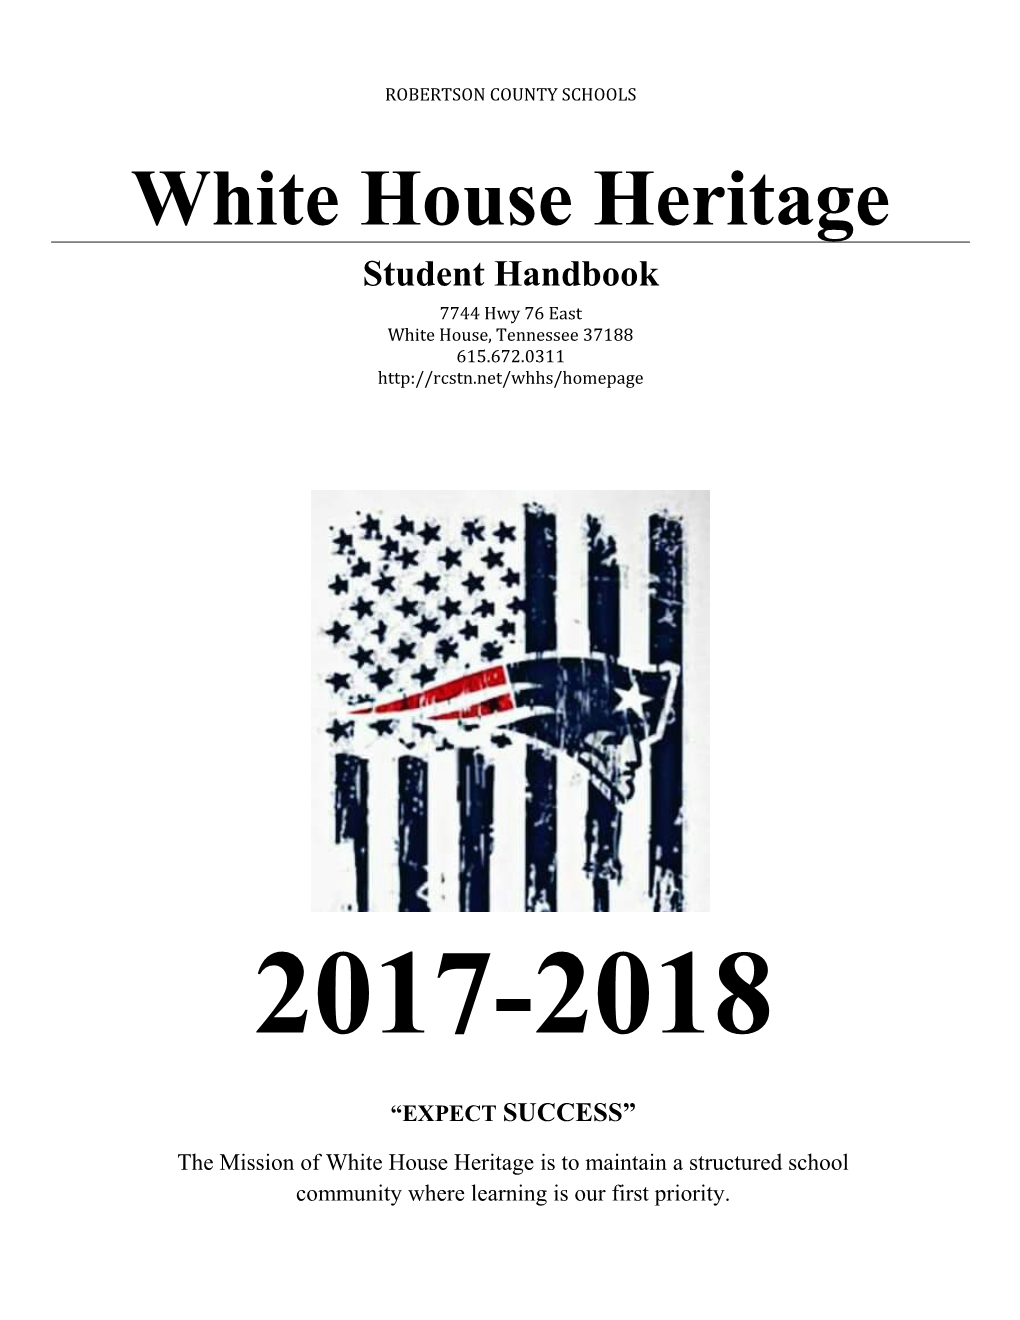 White House Heritage